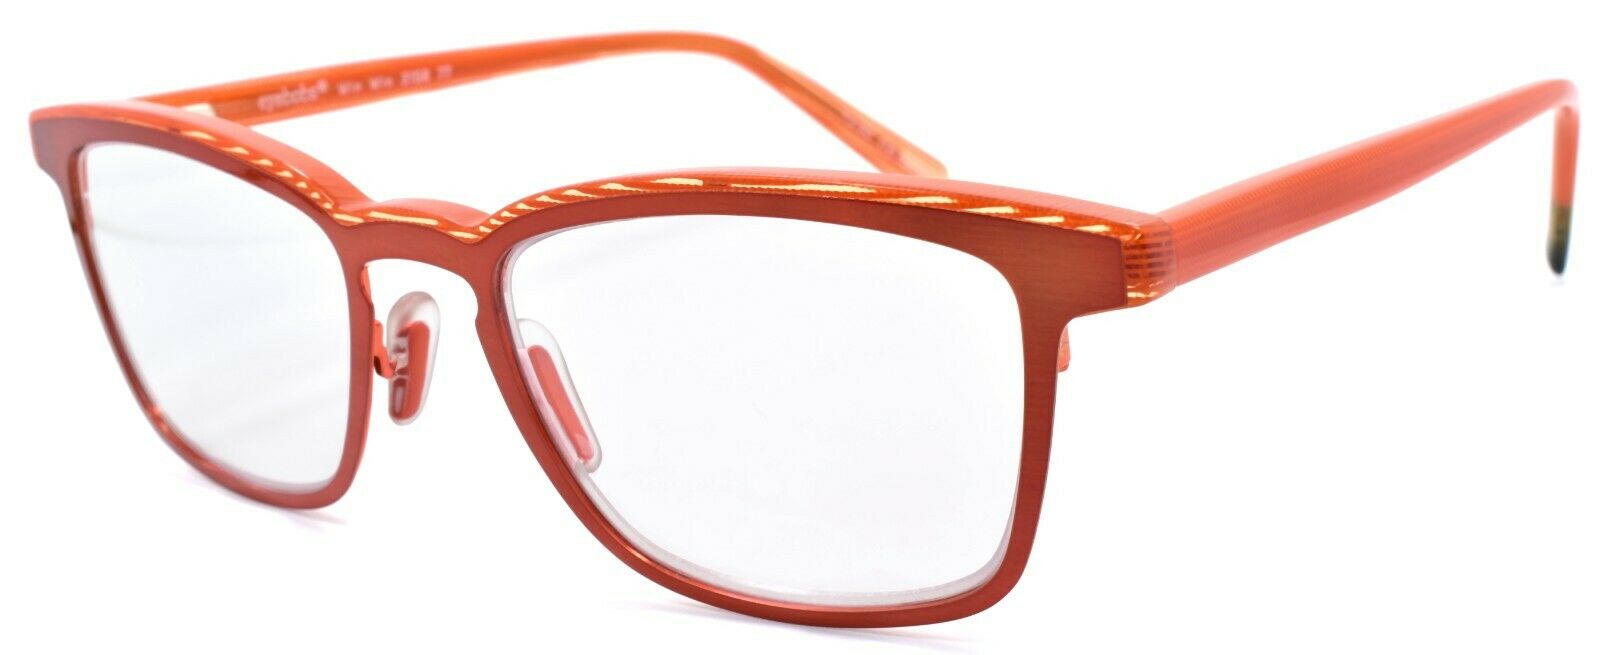 1-Eyebobs Win Win 3158 77 Men's Reading Glasses Orange / Orange Mesh +2.50-842754173100-IKSpecs